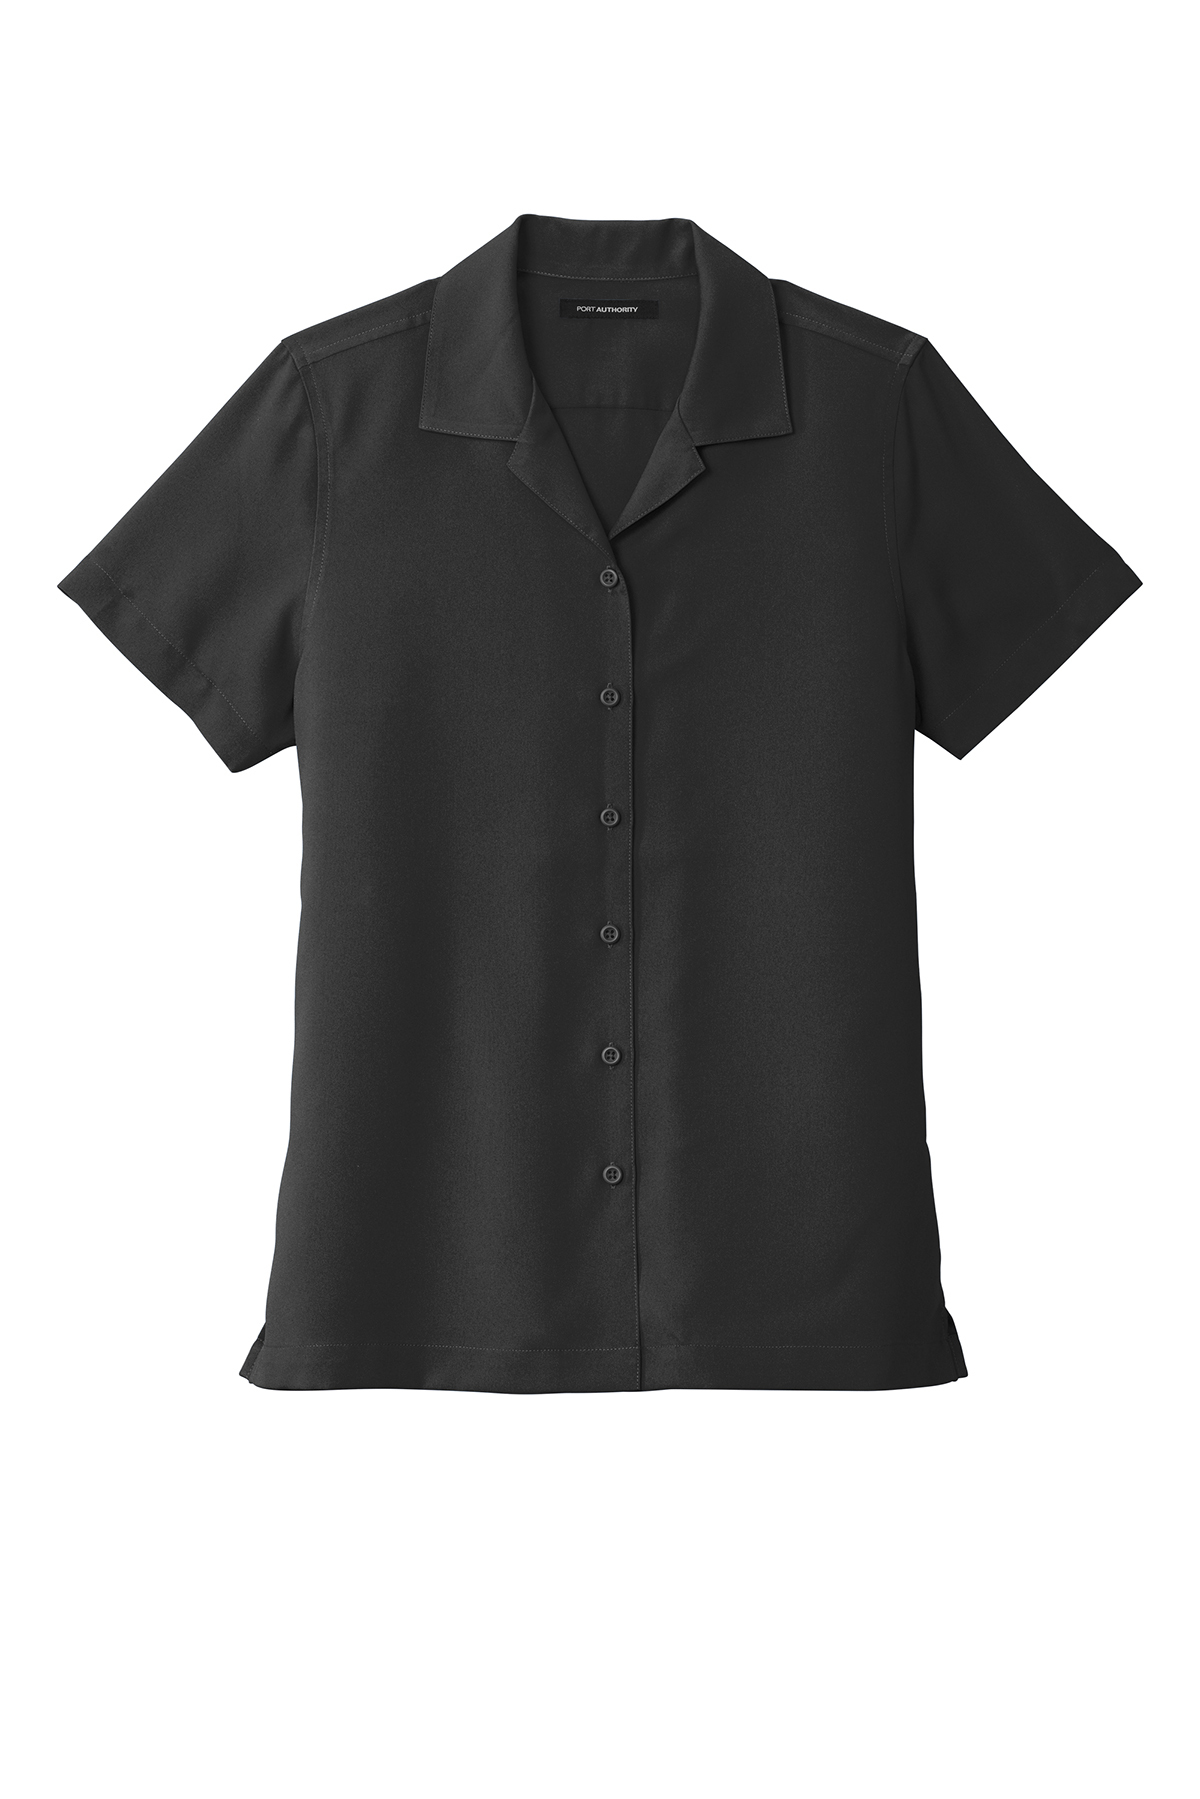 Port Authority LW400 - Ladies Short Sleeve Performance Staff Shirt